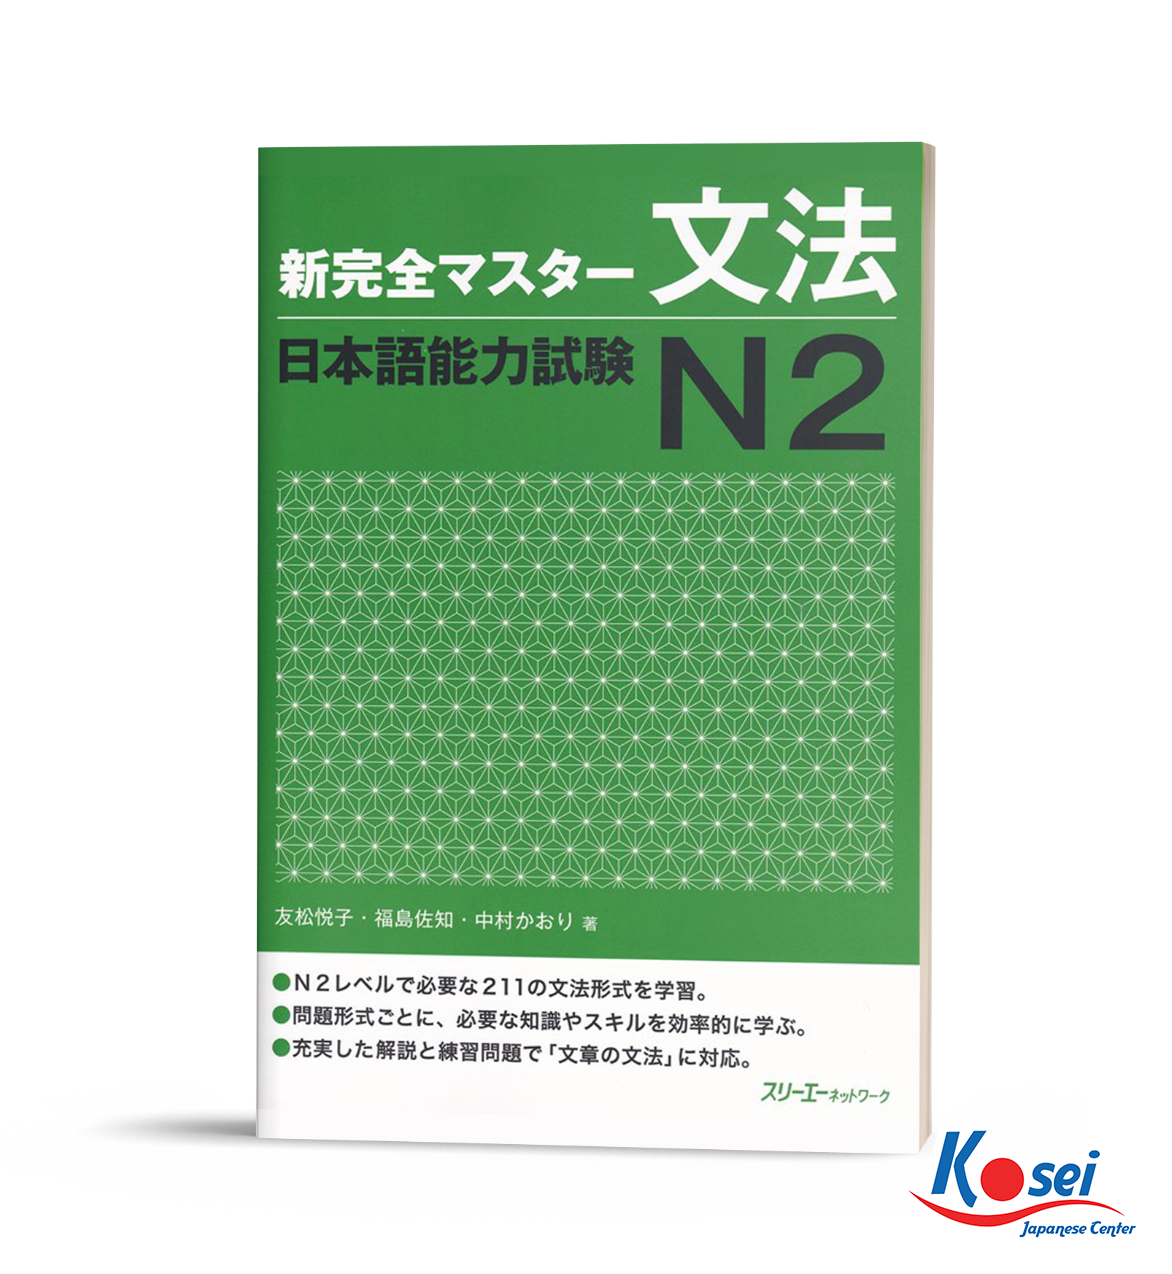 Giáo trình N2: 新完全マスター 文法 N2 | Shin Kanzen Bunpou N2 - Ngữ Pháp